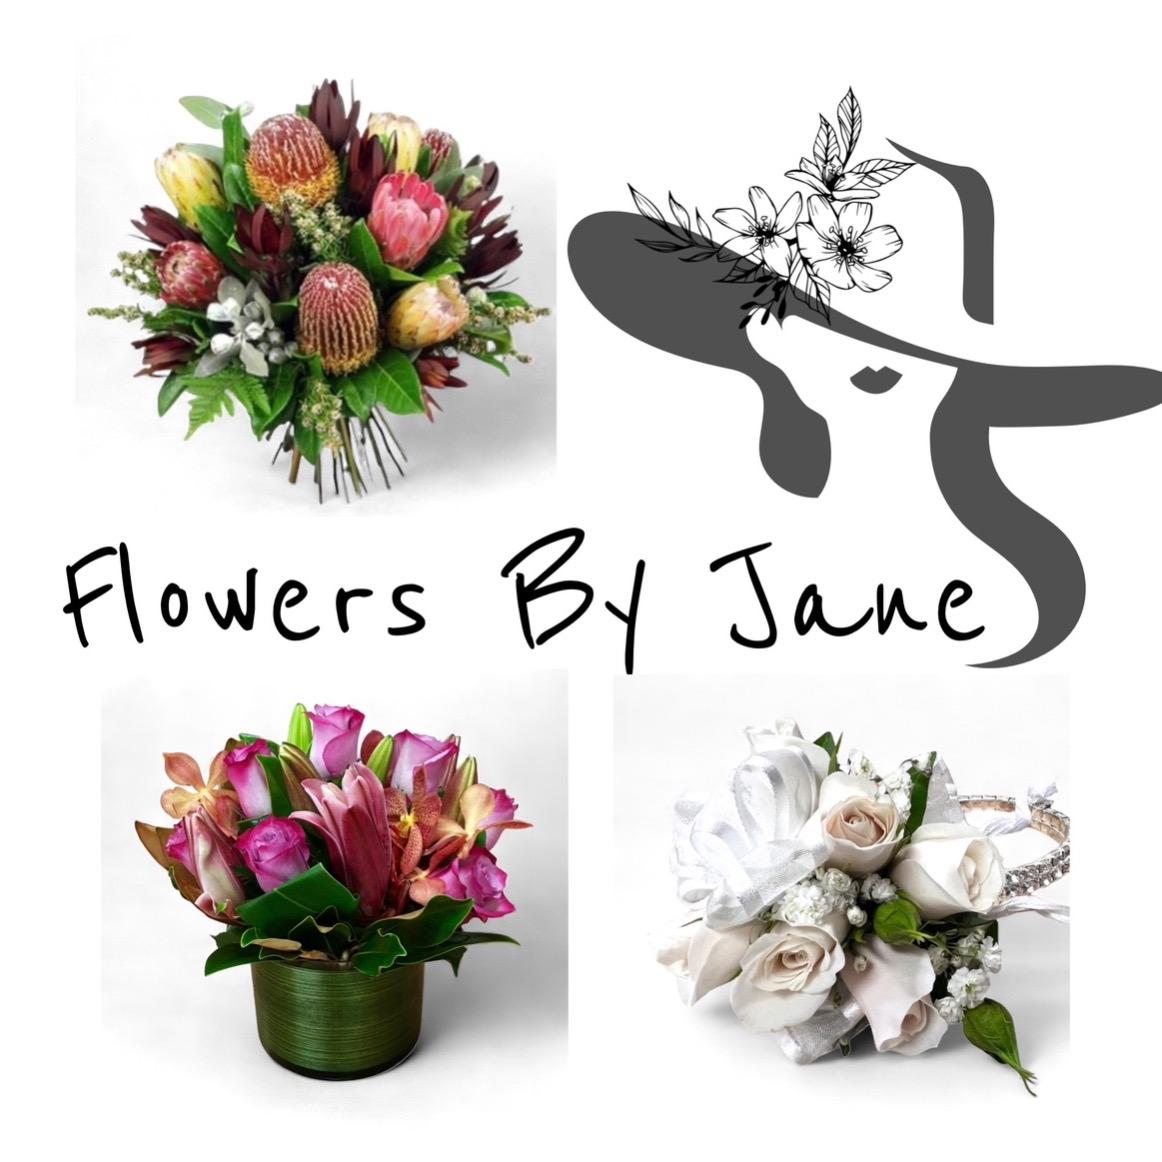 Flowers by Jane - Brisbane City, QLD 4000 - (07) 3229 3844 | ShowMeLocal.com